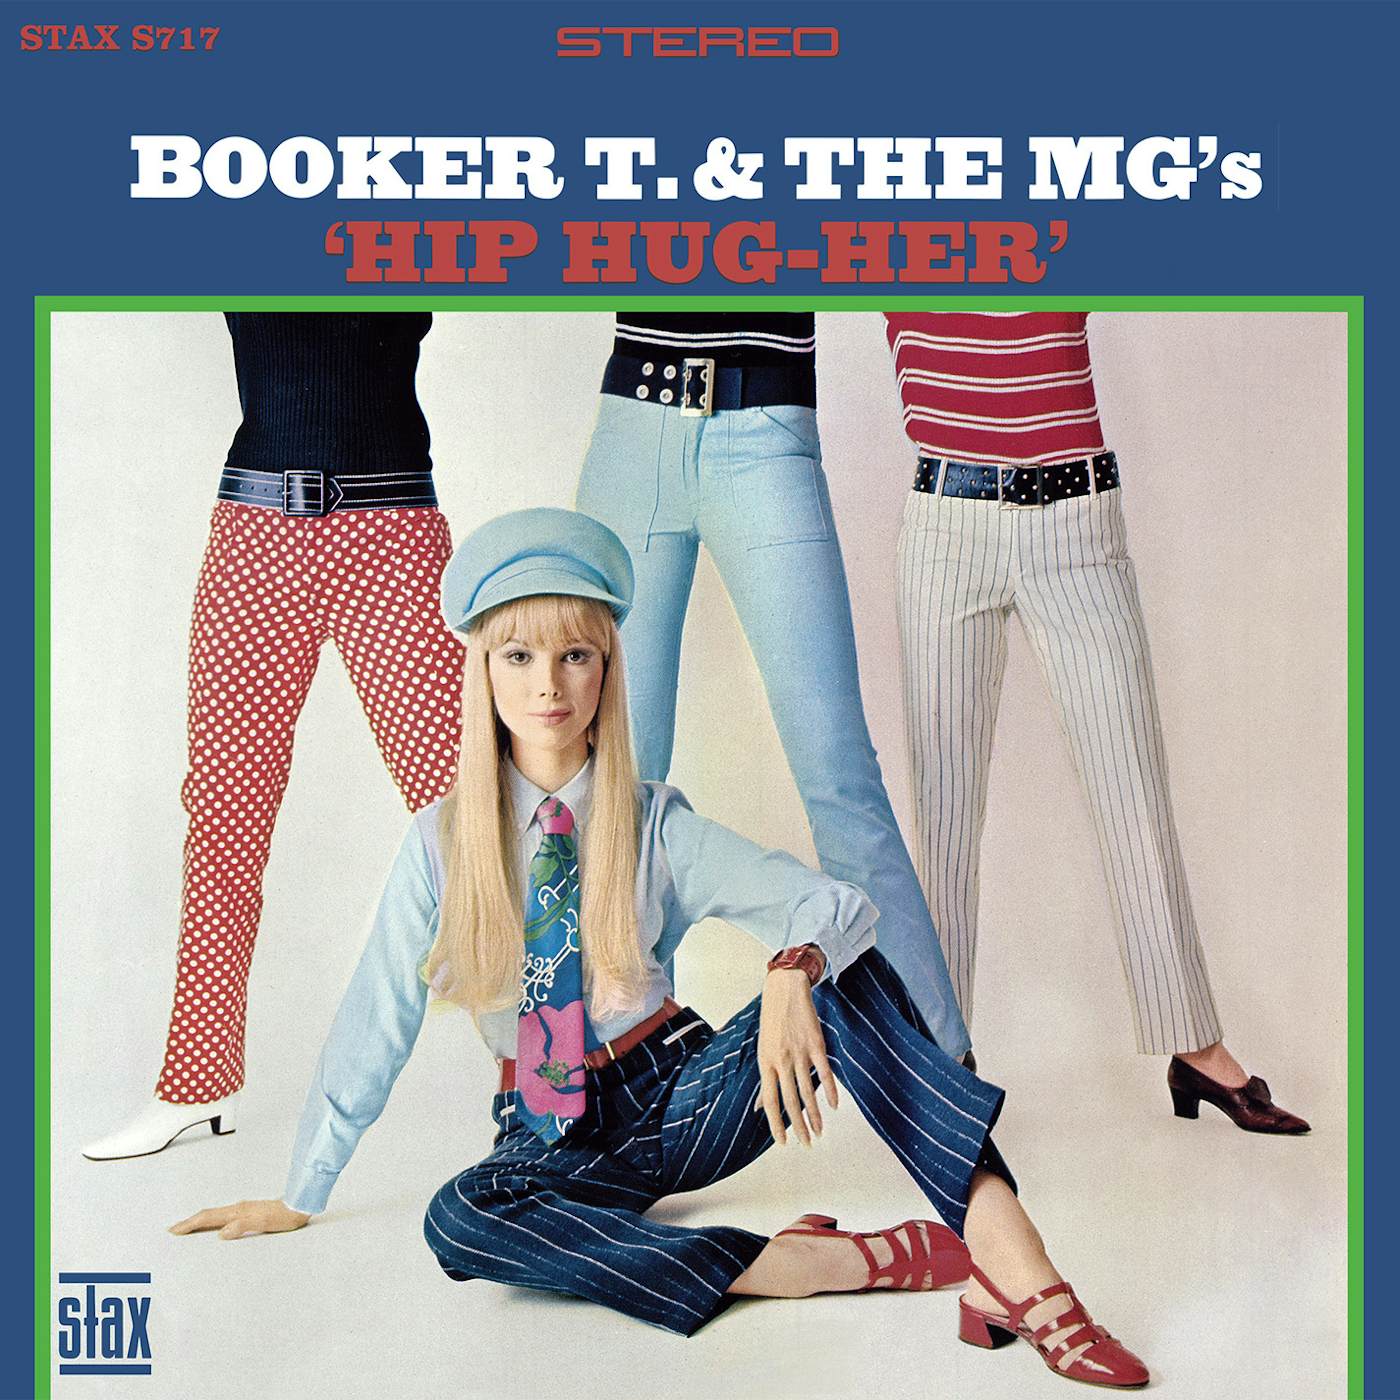 Booker T. & the M.G.'s HIP HUG HER Vinyl Record